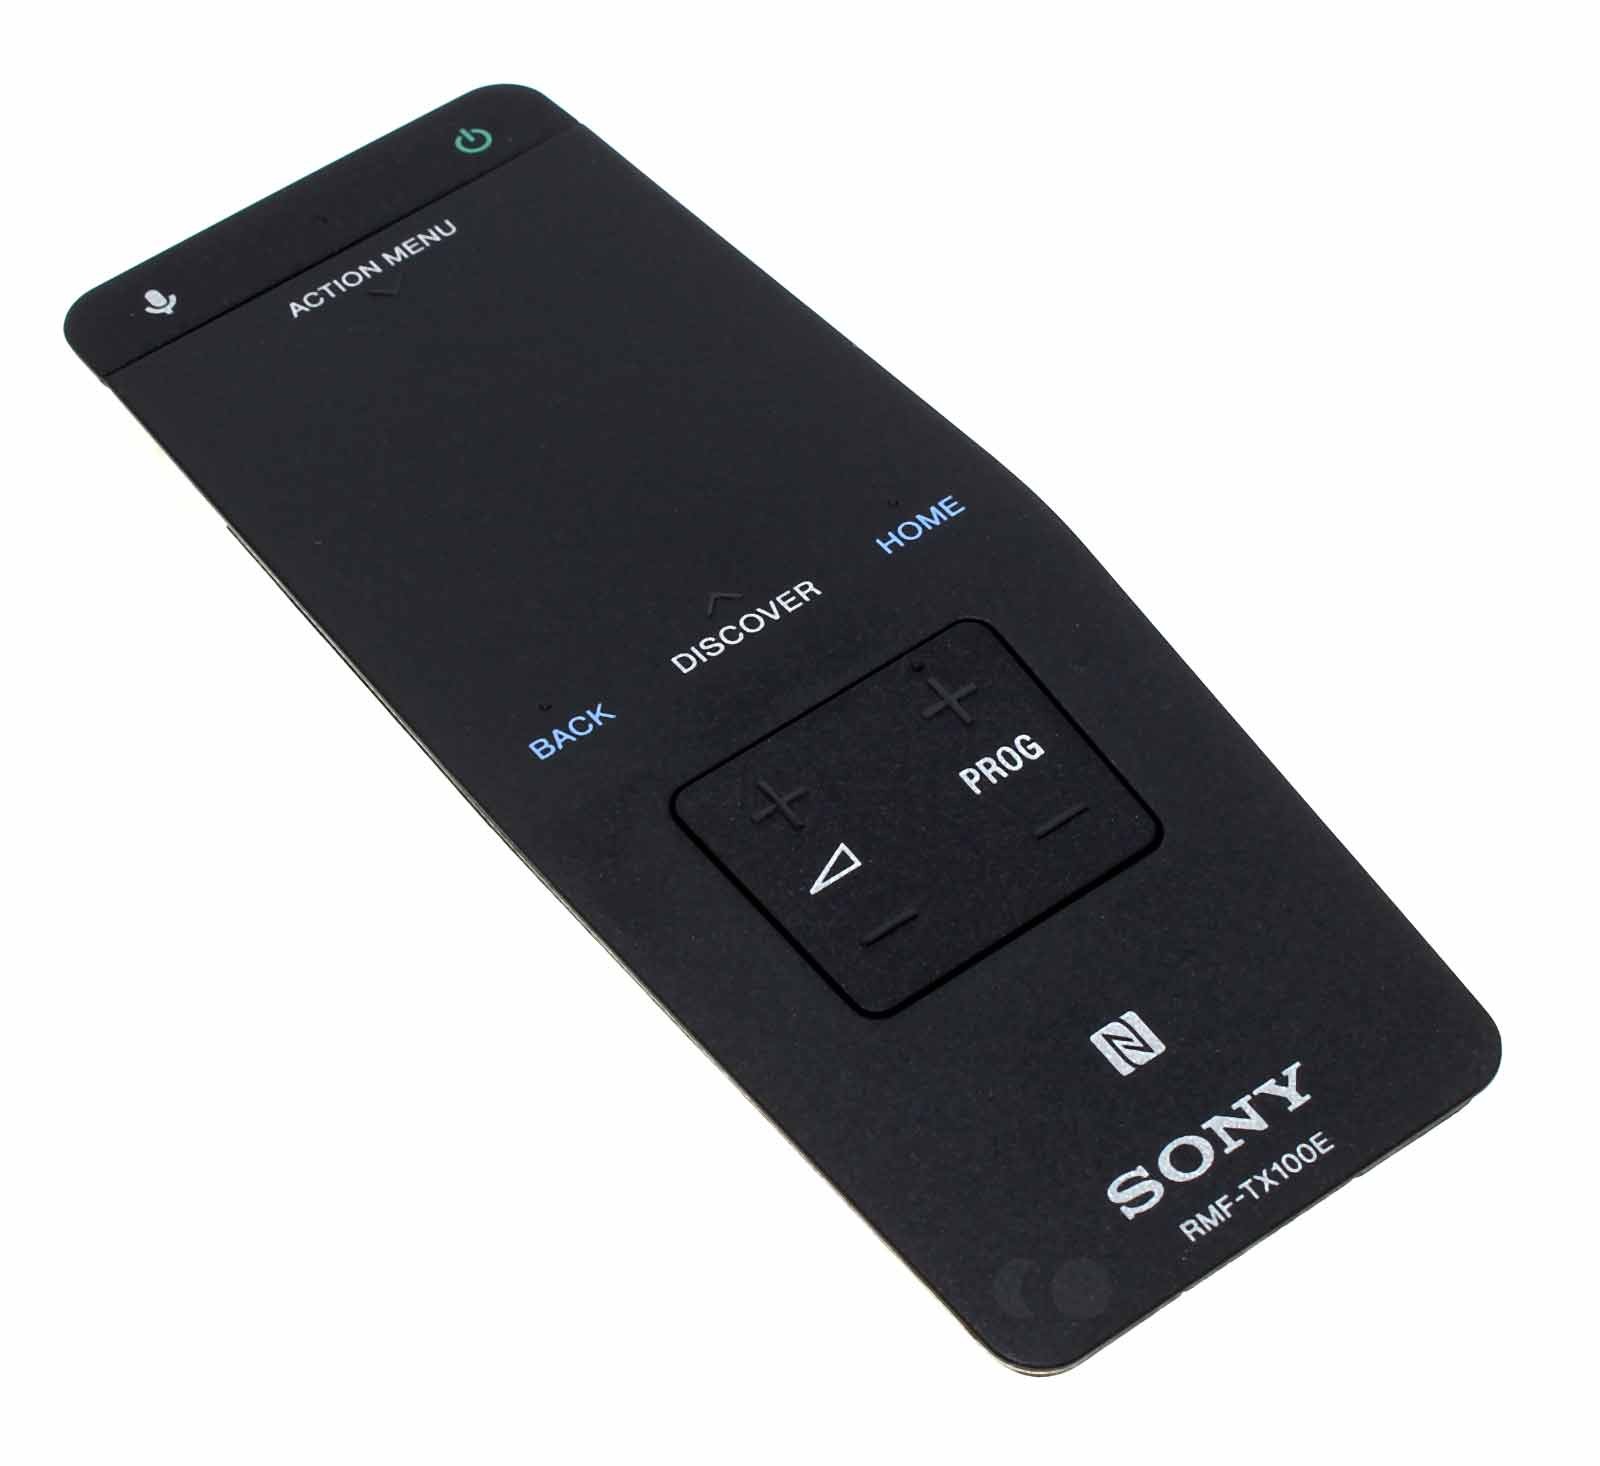 Original Sony RMF-TX100E Fernbedienung für Sony KD KDL Smart-TV, Smart-touch Touchpad, 149295013